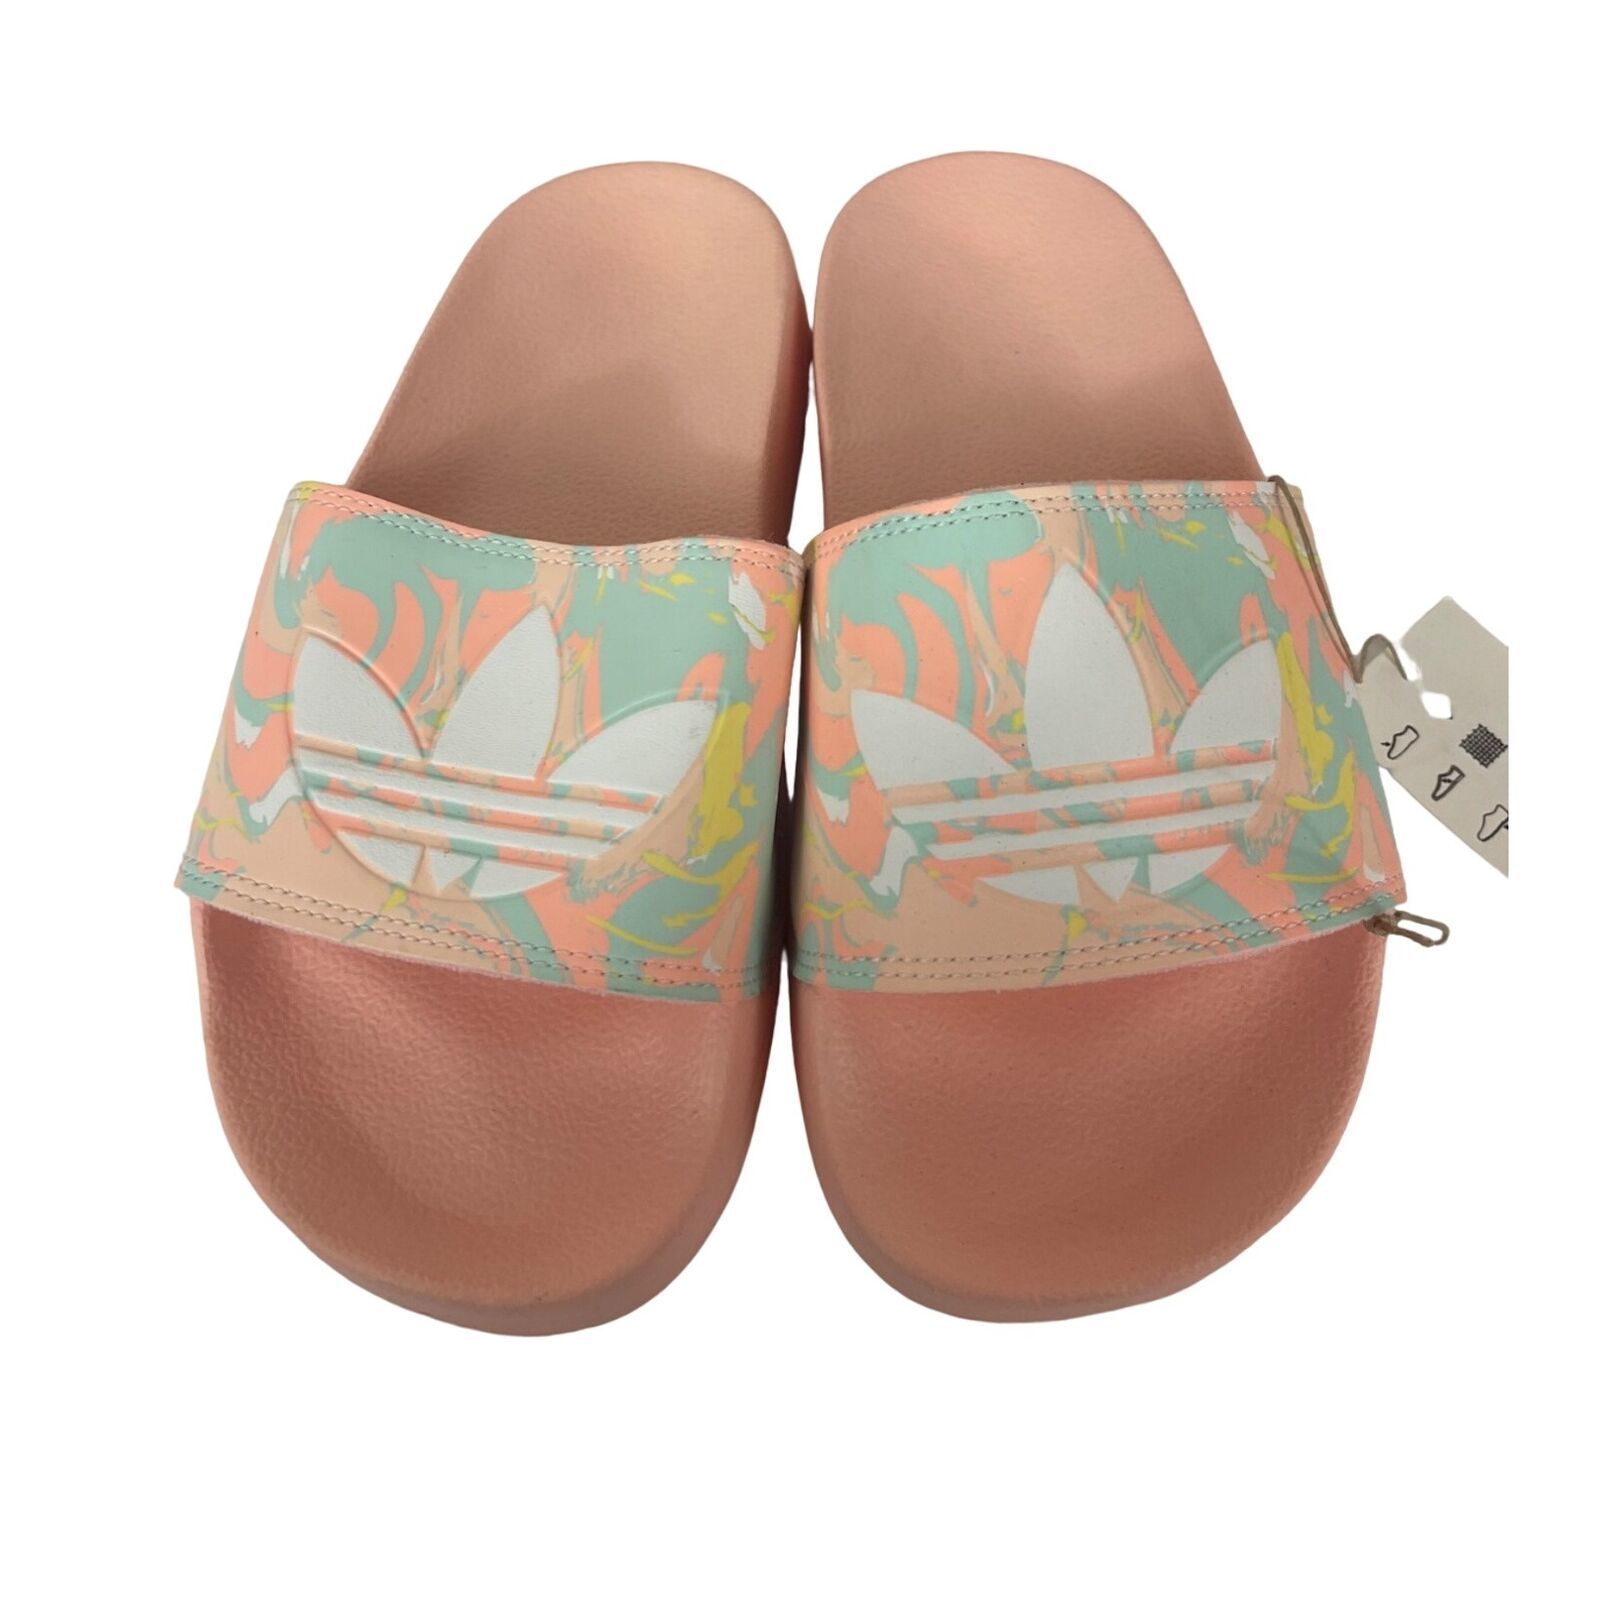 Adidas Originals Adilette Lite J Slides Youth Size 5 Peach EVA Slip On Sandals - $22.49